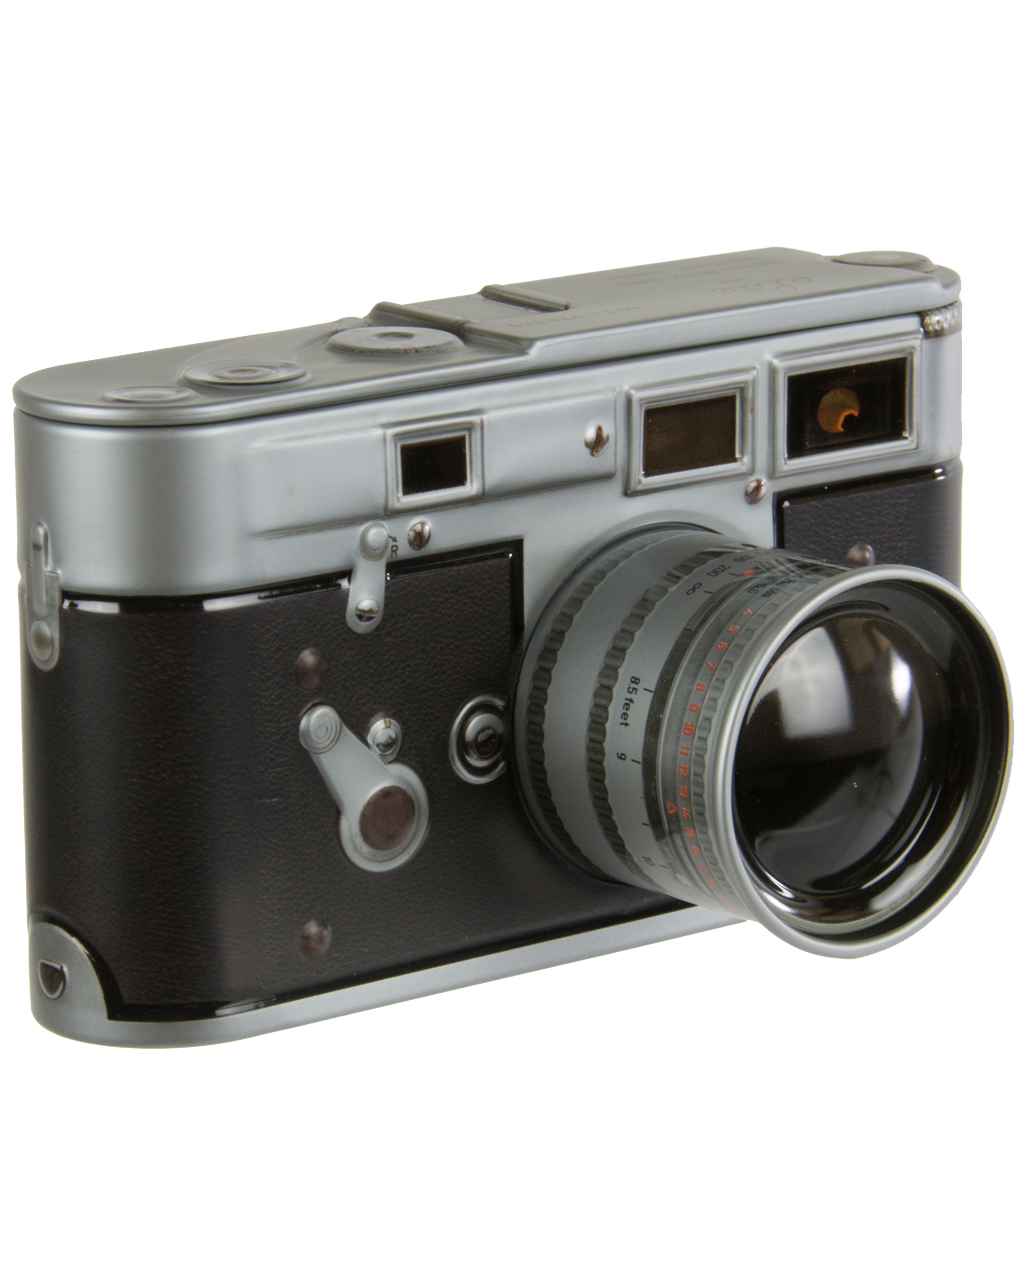 Vintage Blechdose Kamera als Geschenk!